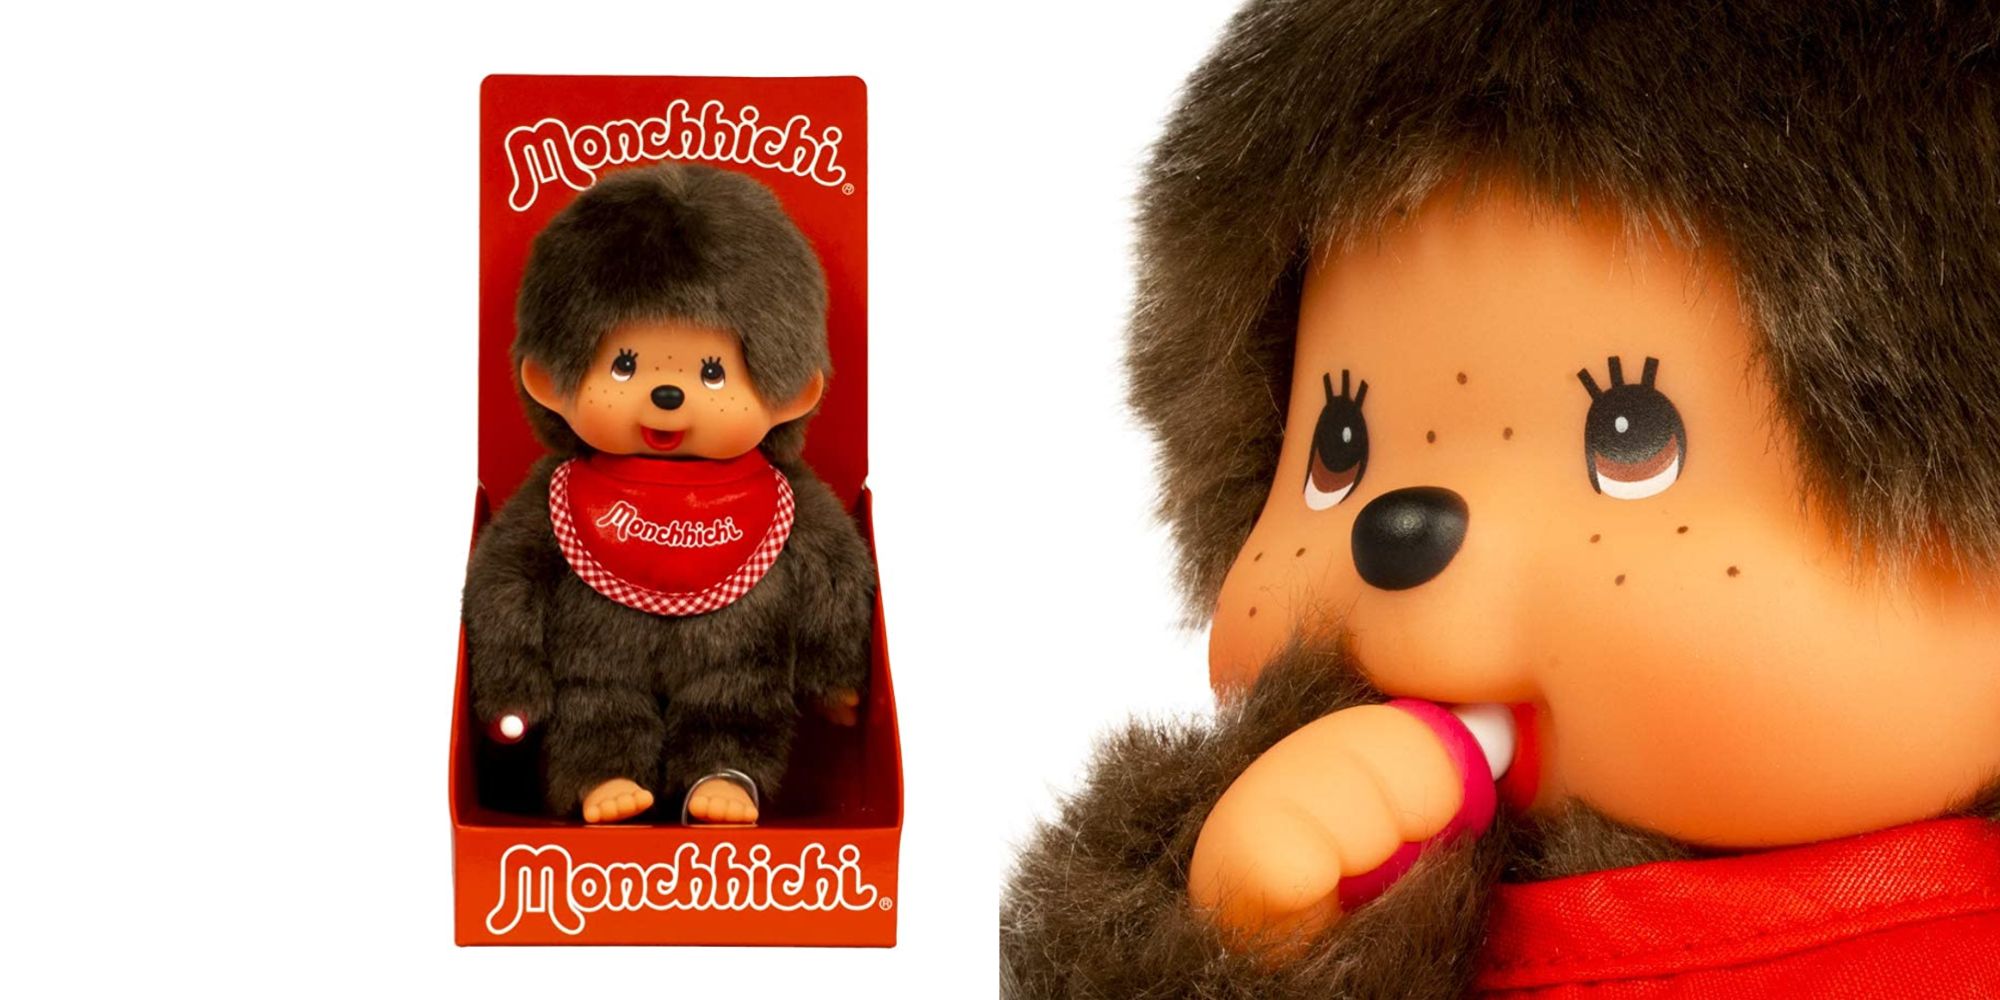 Monchhichi Doll from Amazon